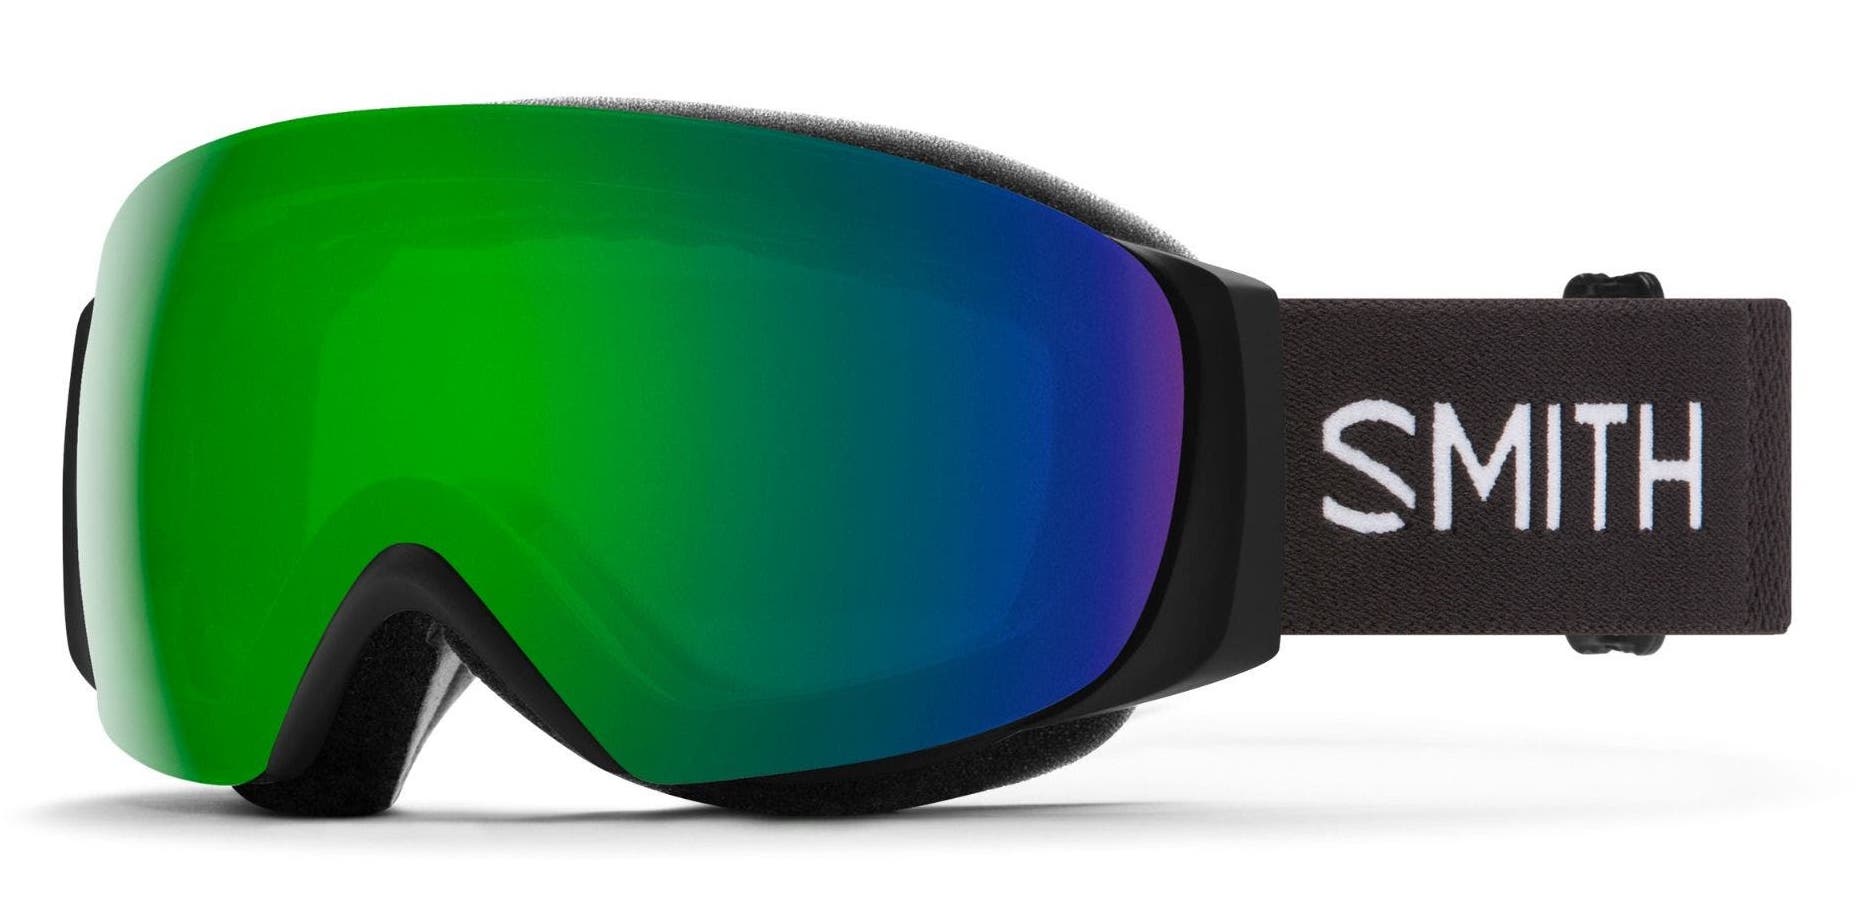 SMITH ChromaPop Goggle Lens Guide | SMITH Snow Goggles | SportRx